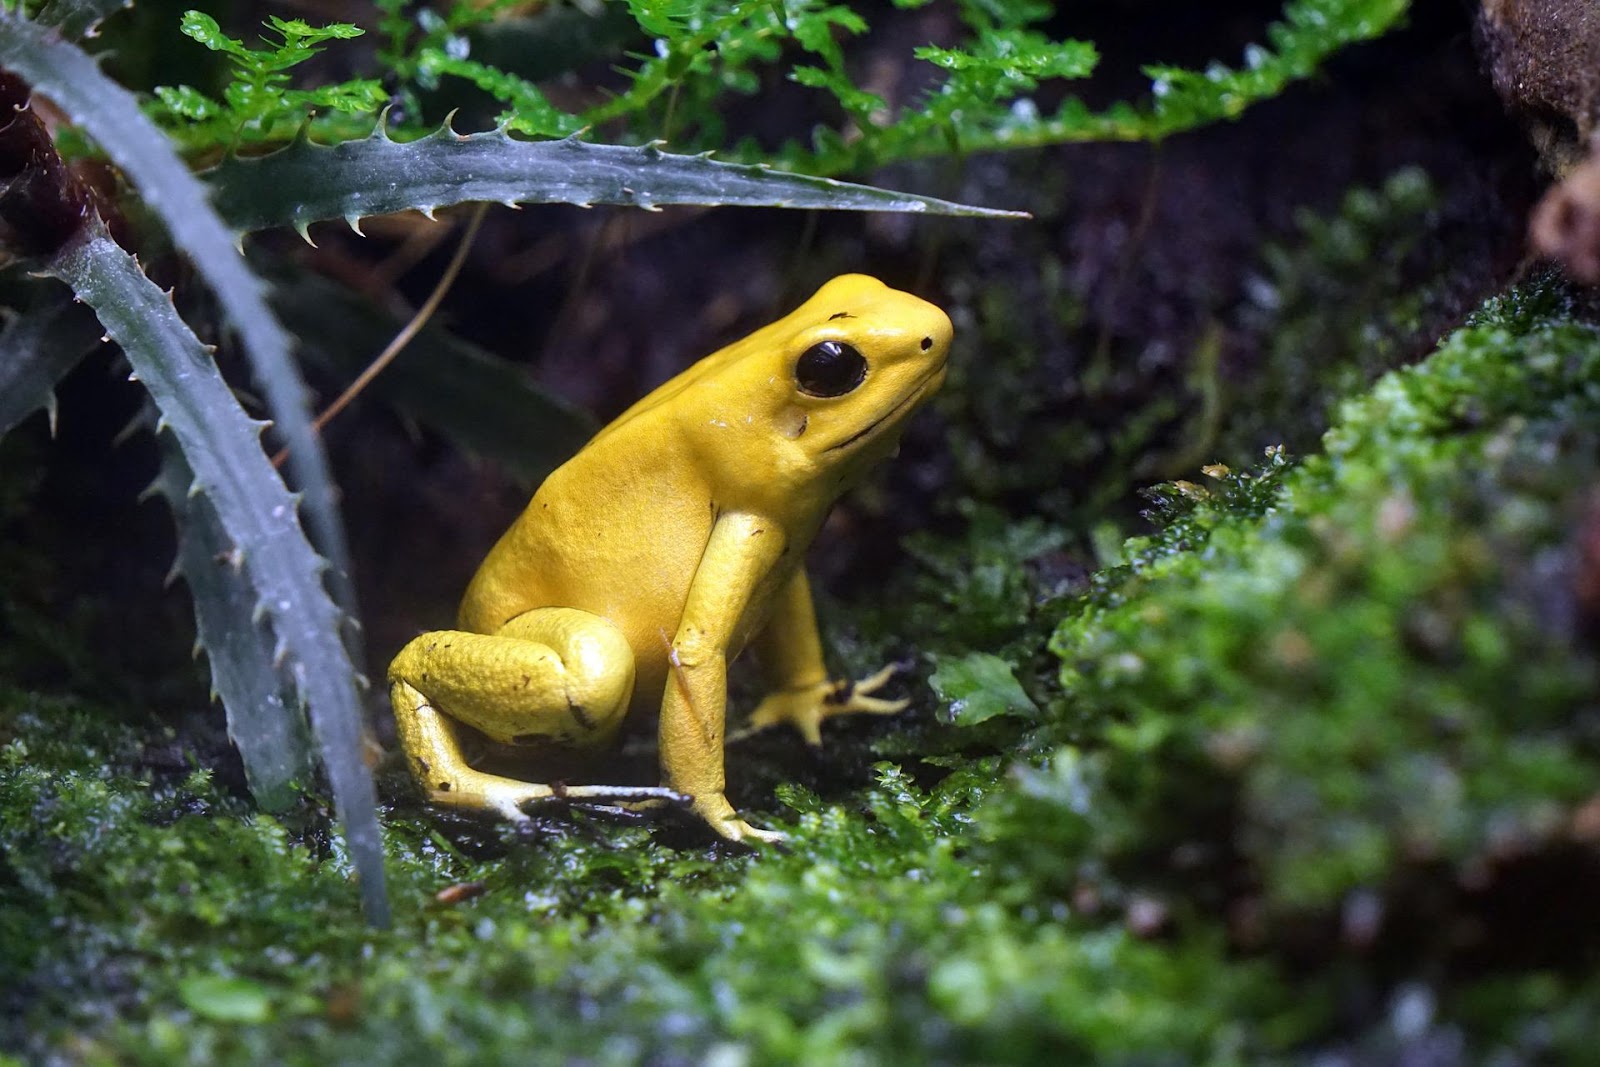 Golden dart frog in natural habitat